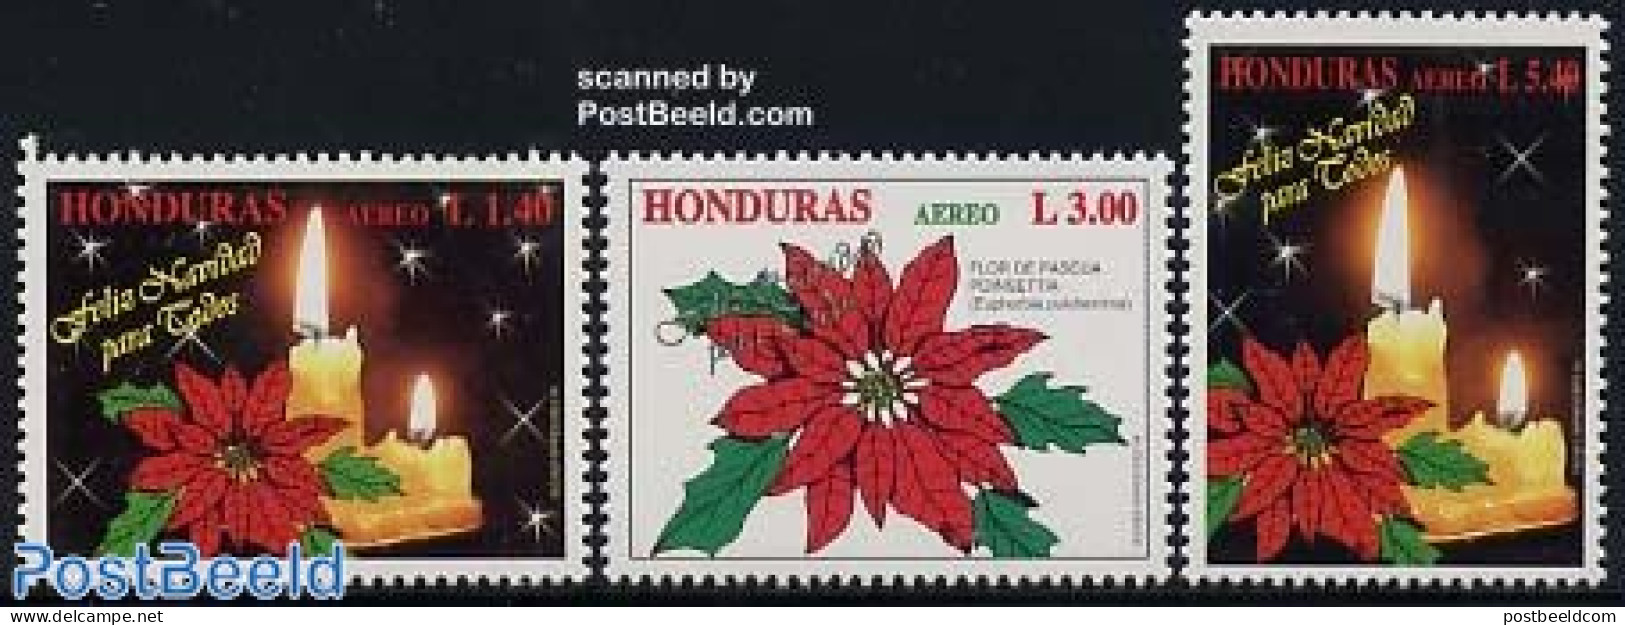 Honduras 1996 Christmas 3v, Mint NH, Religion - Christmas - Weihnachten